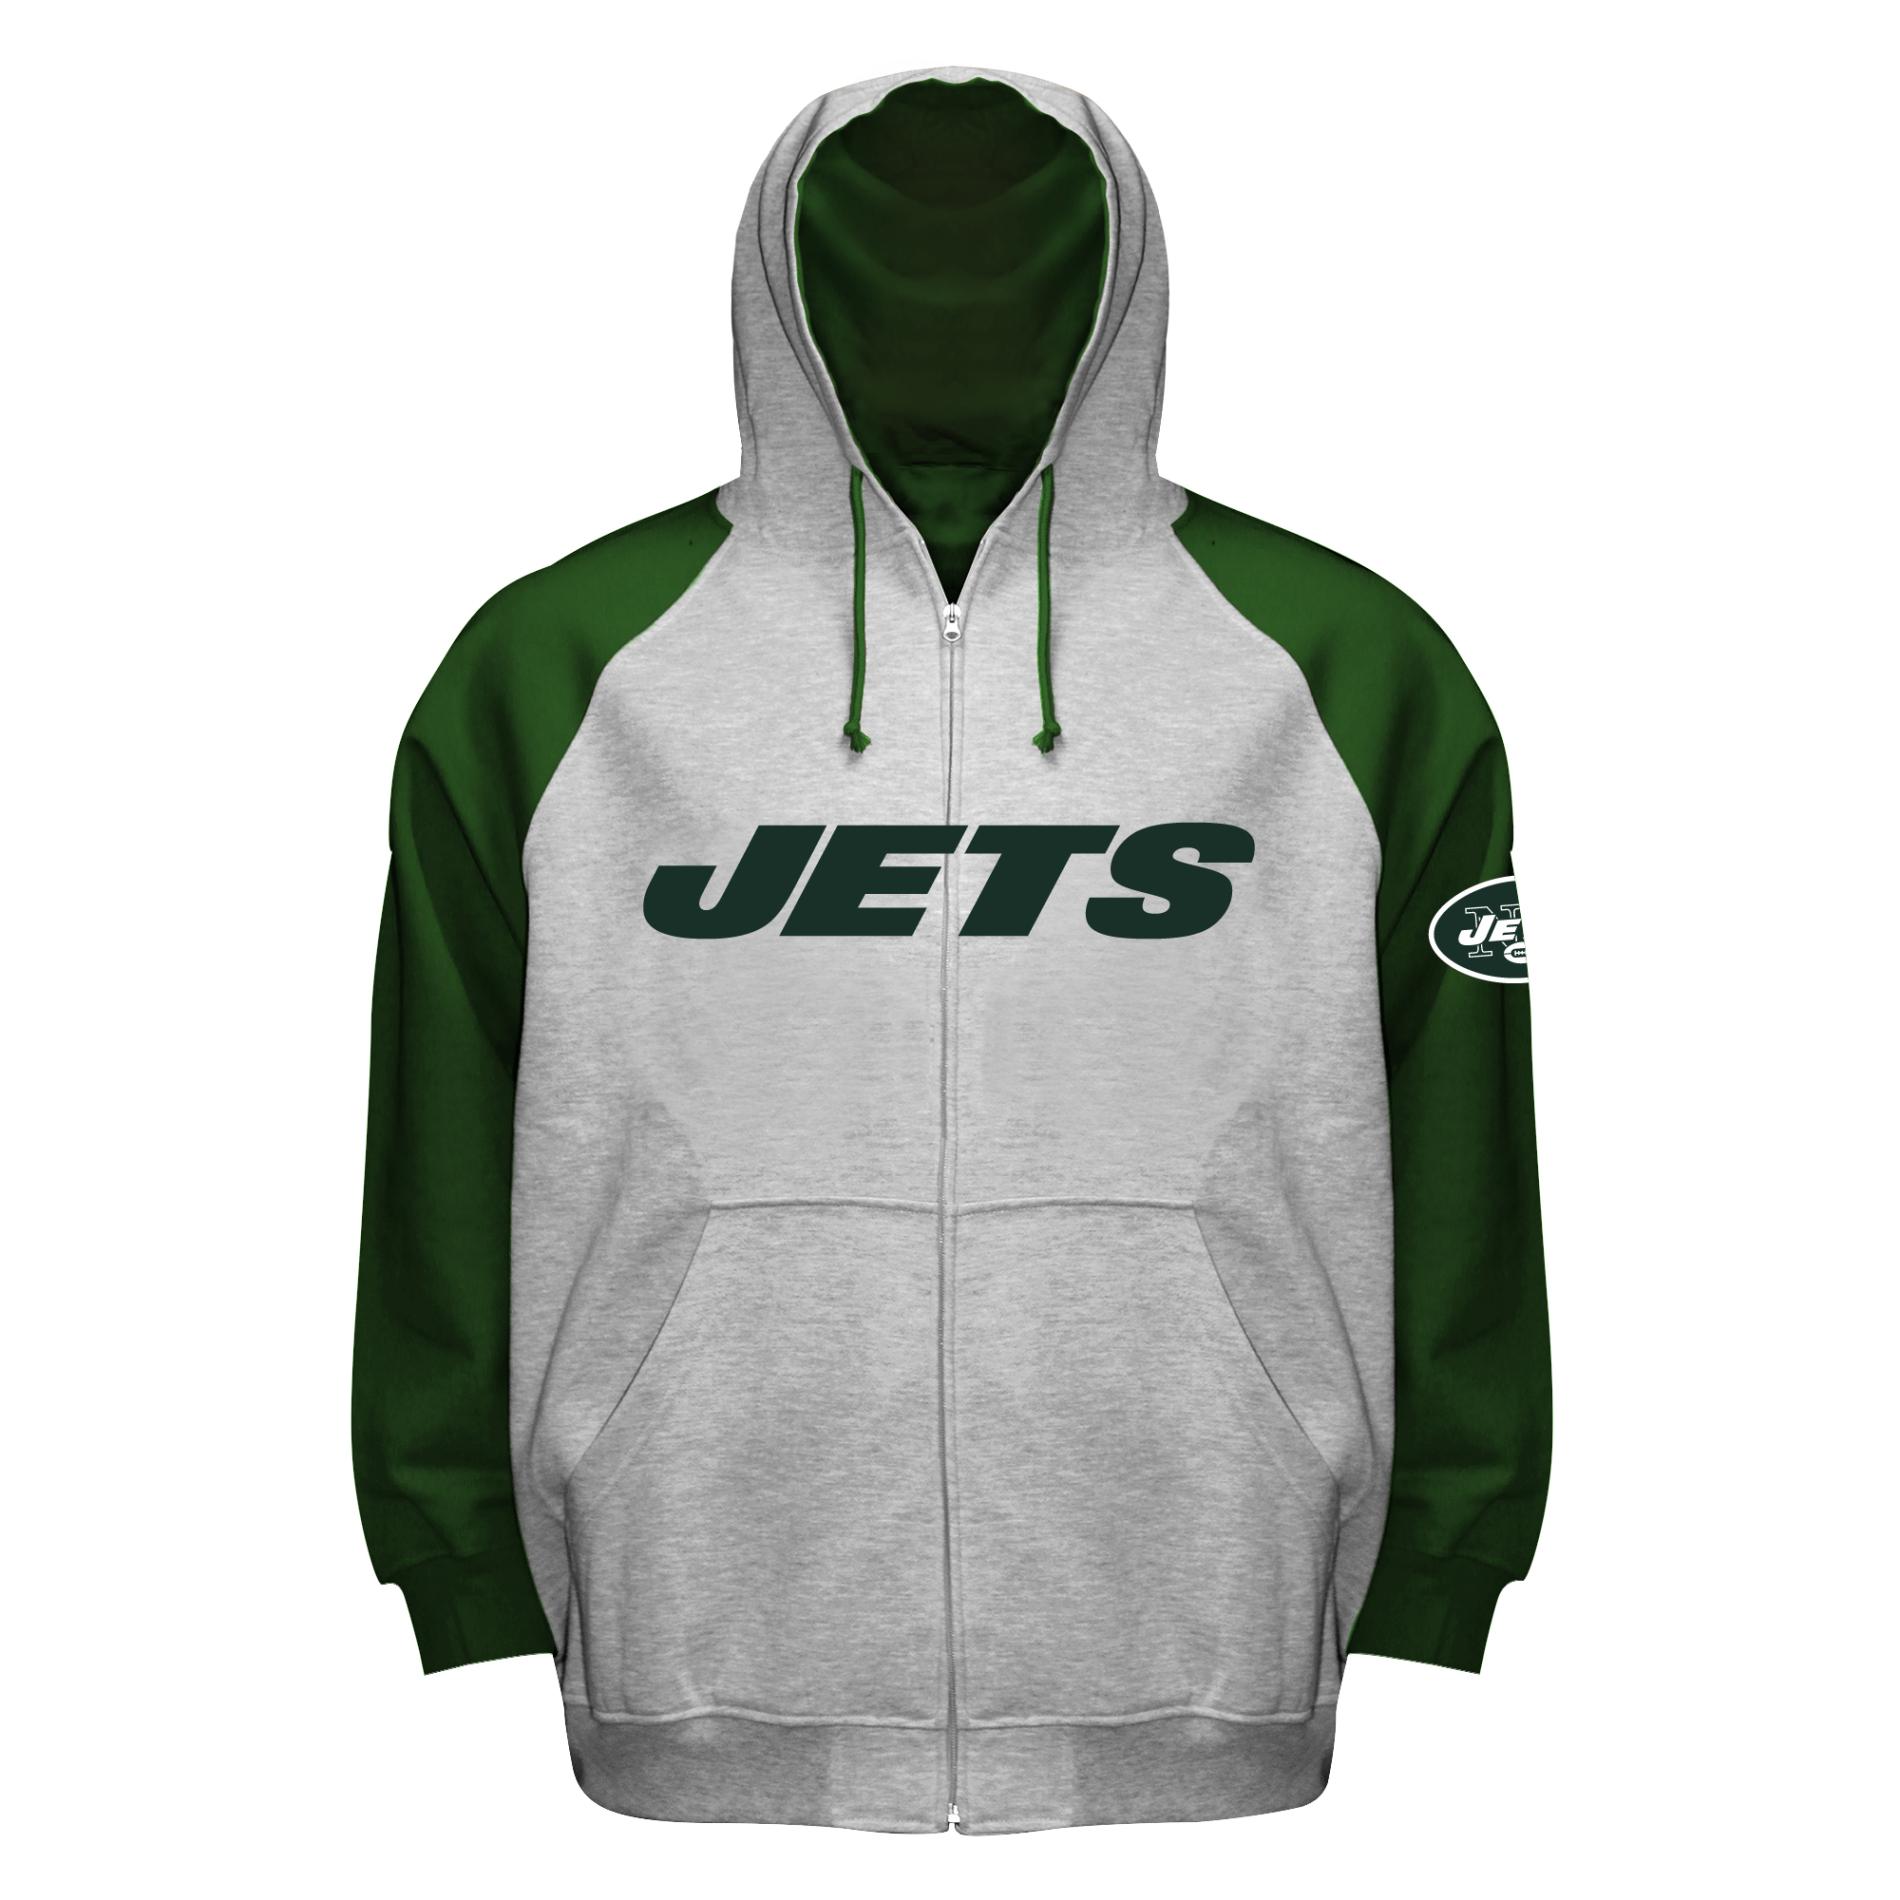 NFL Men's Big & Tall Hoodie Jacket - New York Jets